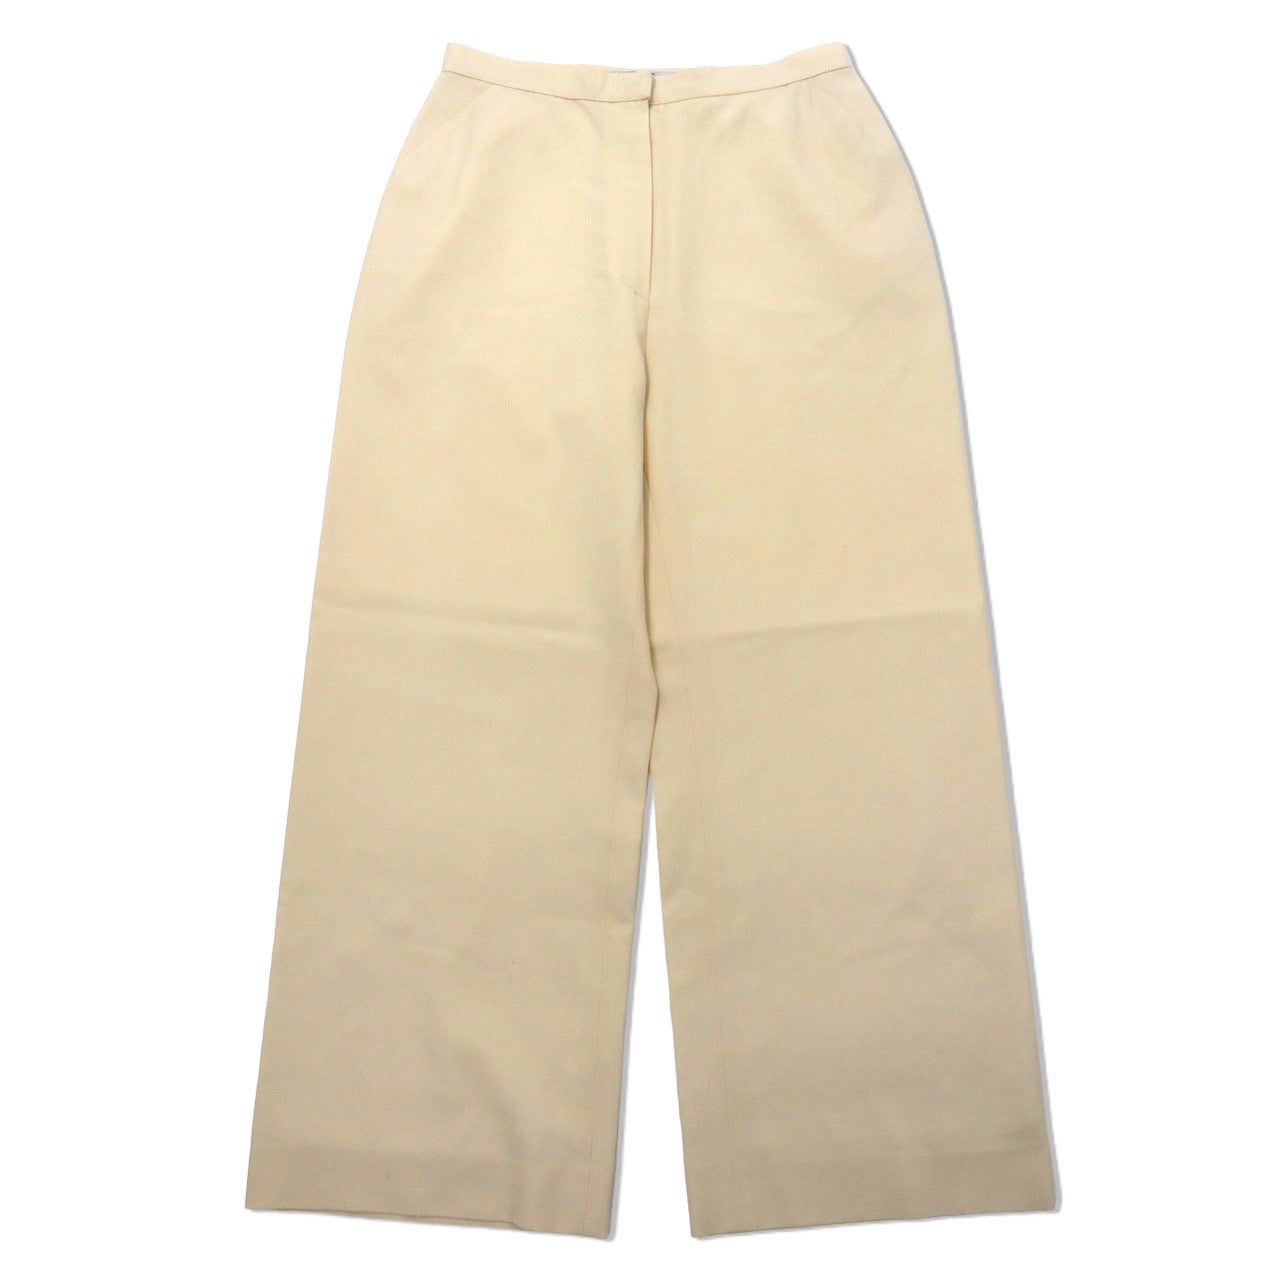 Salvatore Ferragamo Wide Slacks Pants 46 White Wool Vintage Italian Made